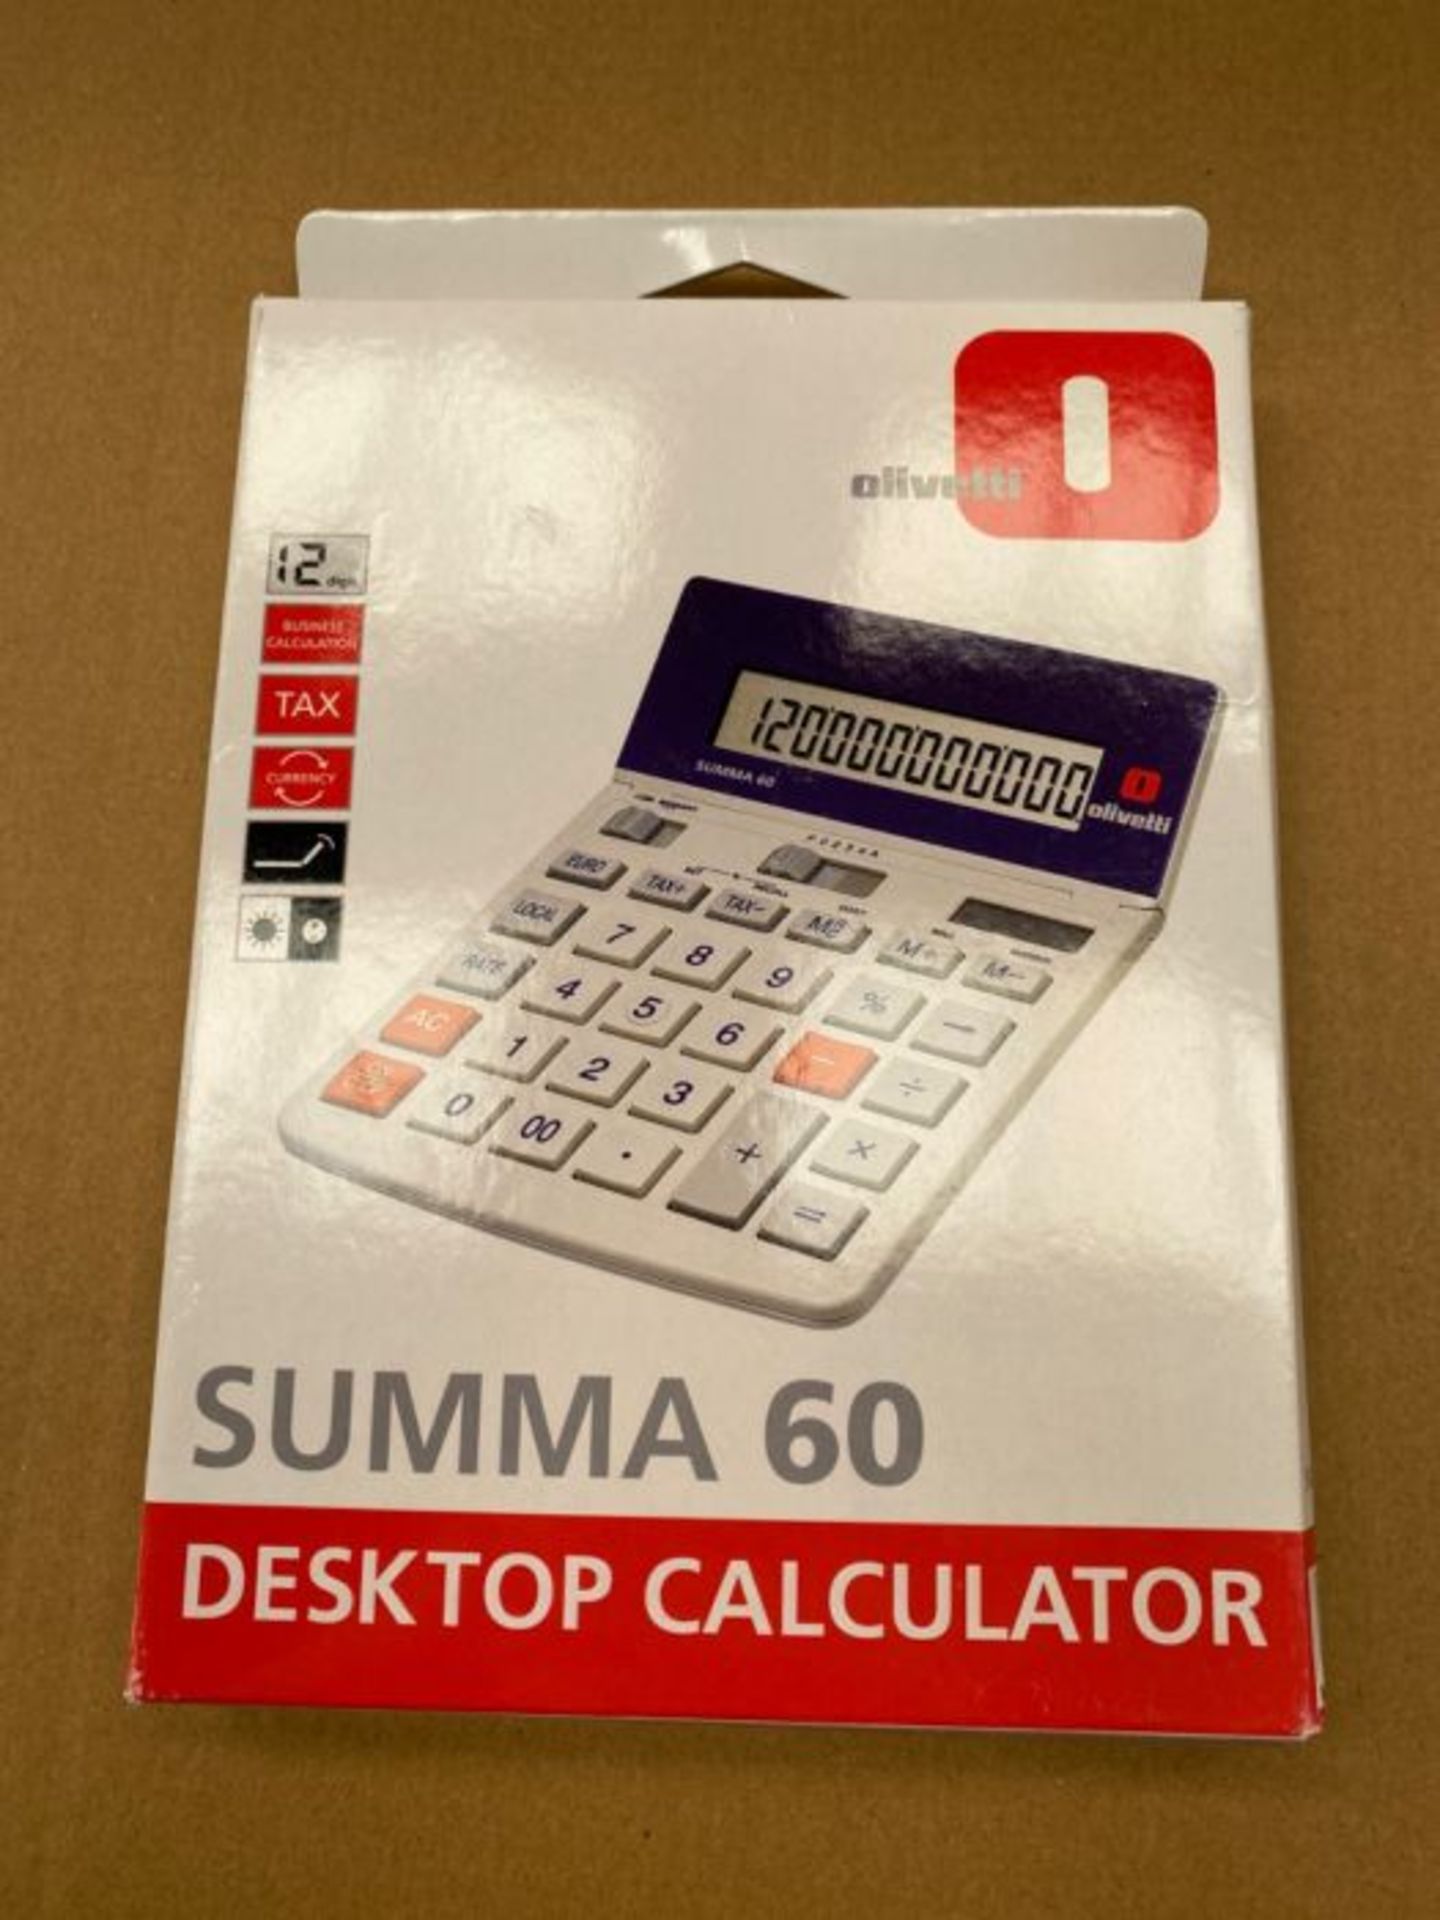 Olivetti b9320 Calculator - Image 2 of 3